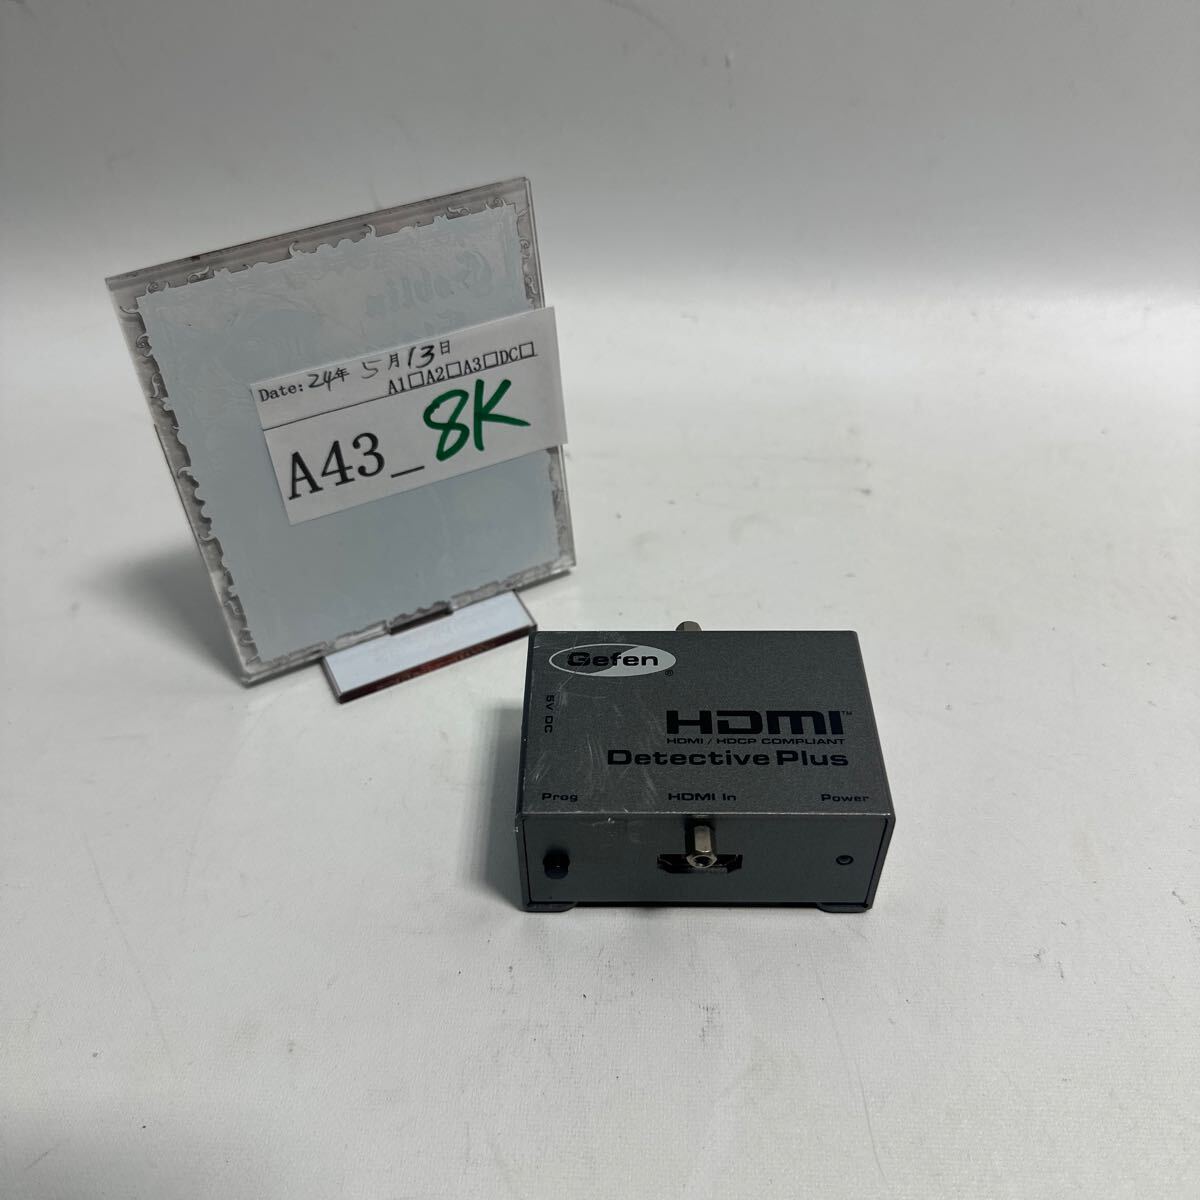 「A43_8K」Gefen HDMI Detective Plus 動作品EXT-HDMI-EDIDP 電源アダプタ無し(240513)_画像1